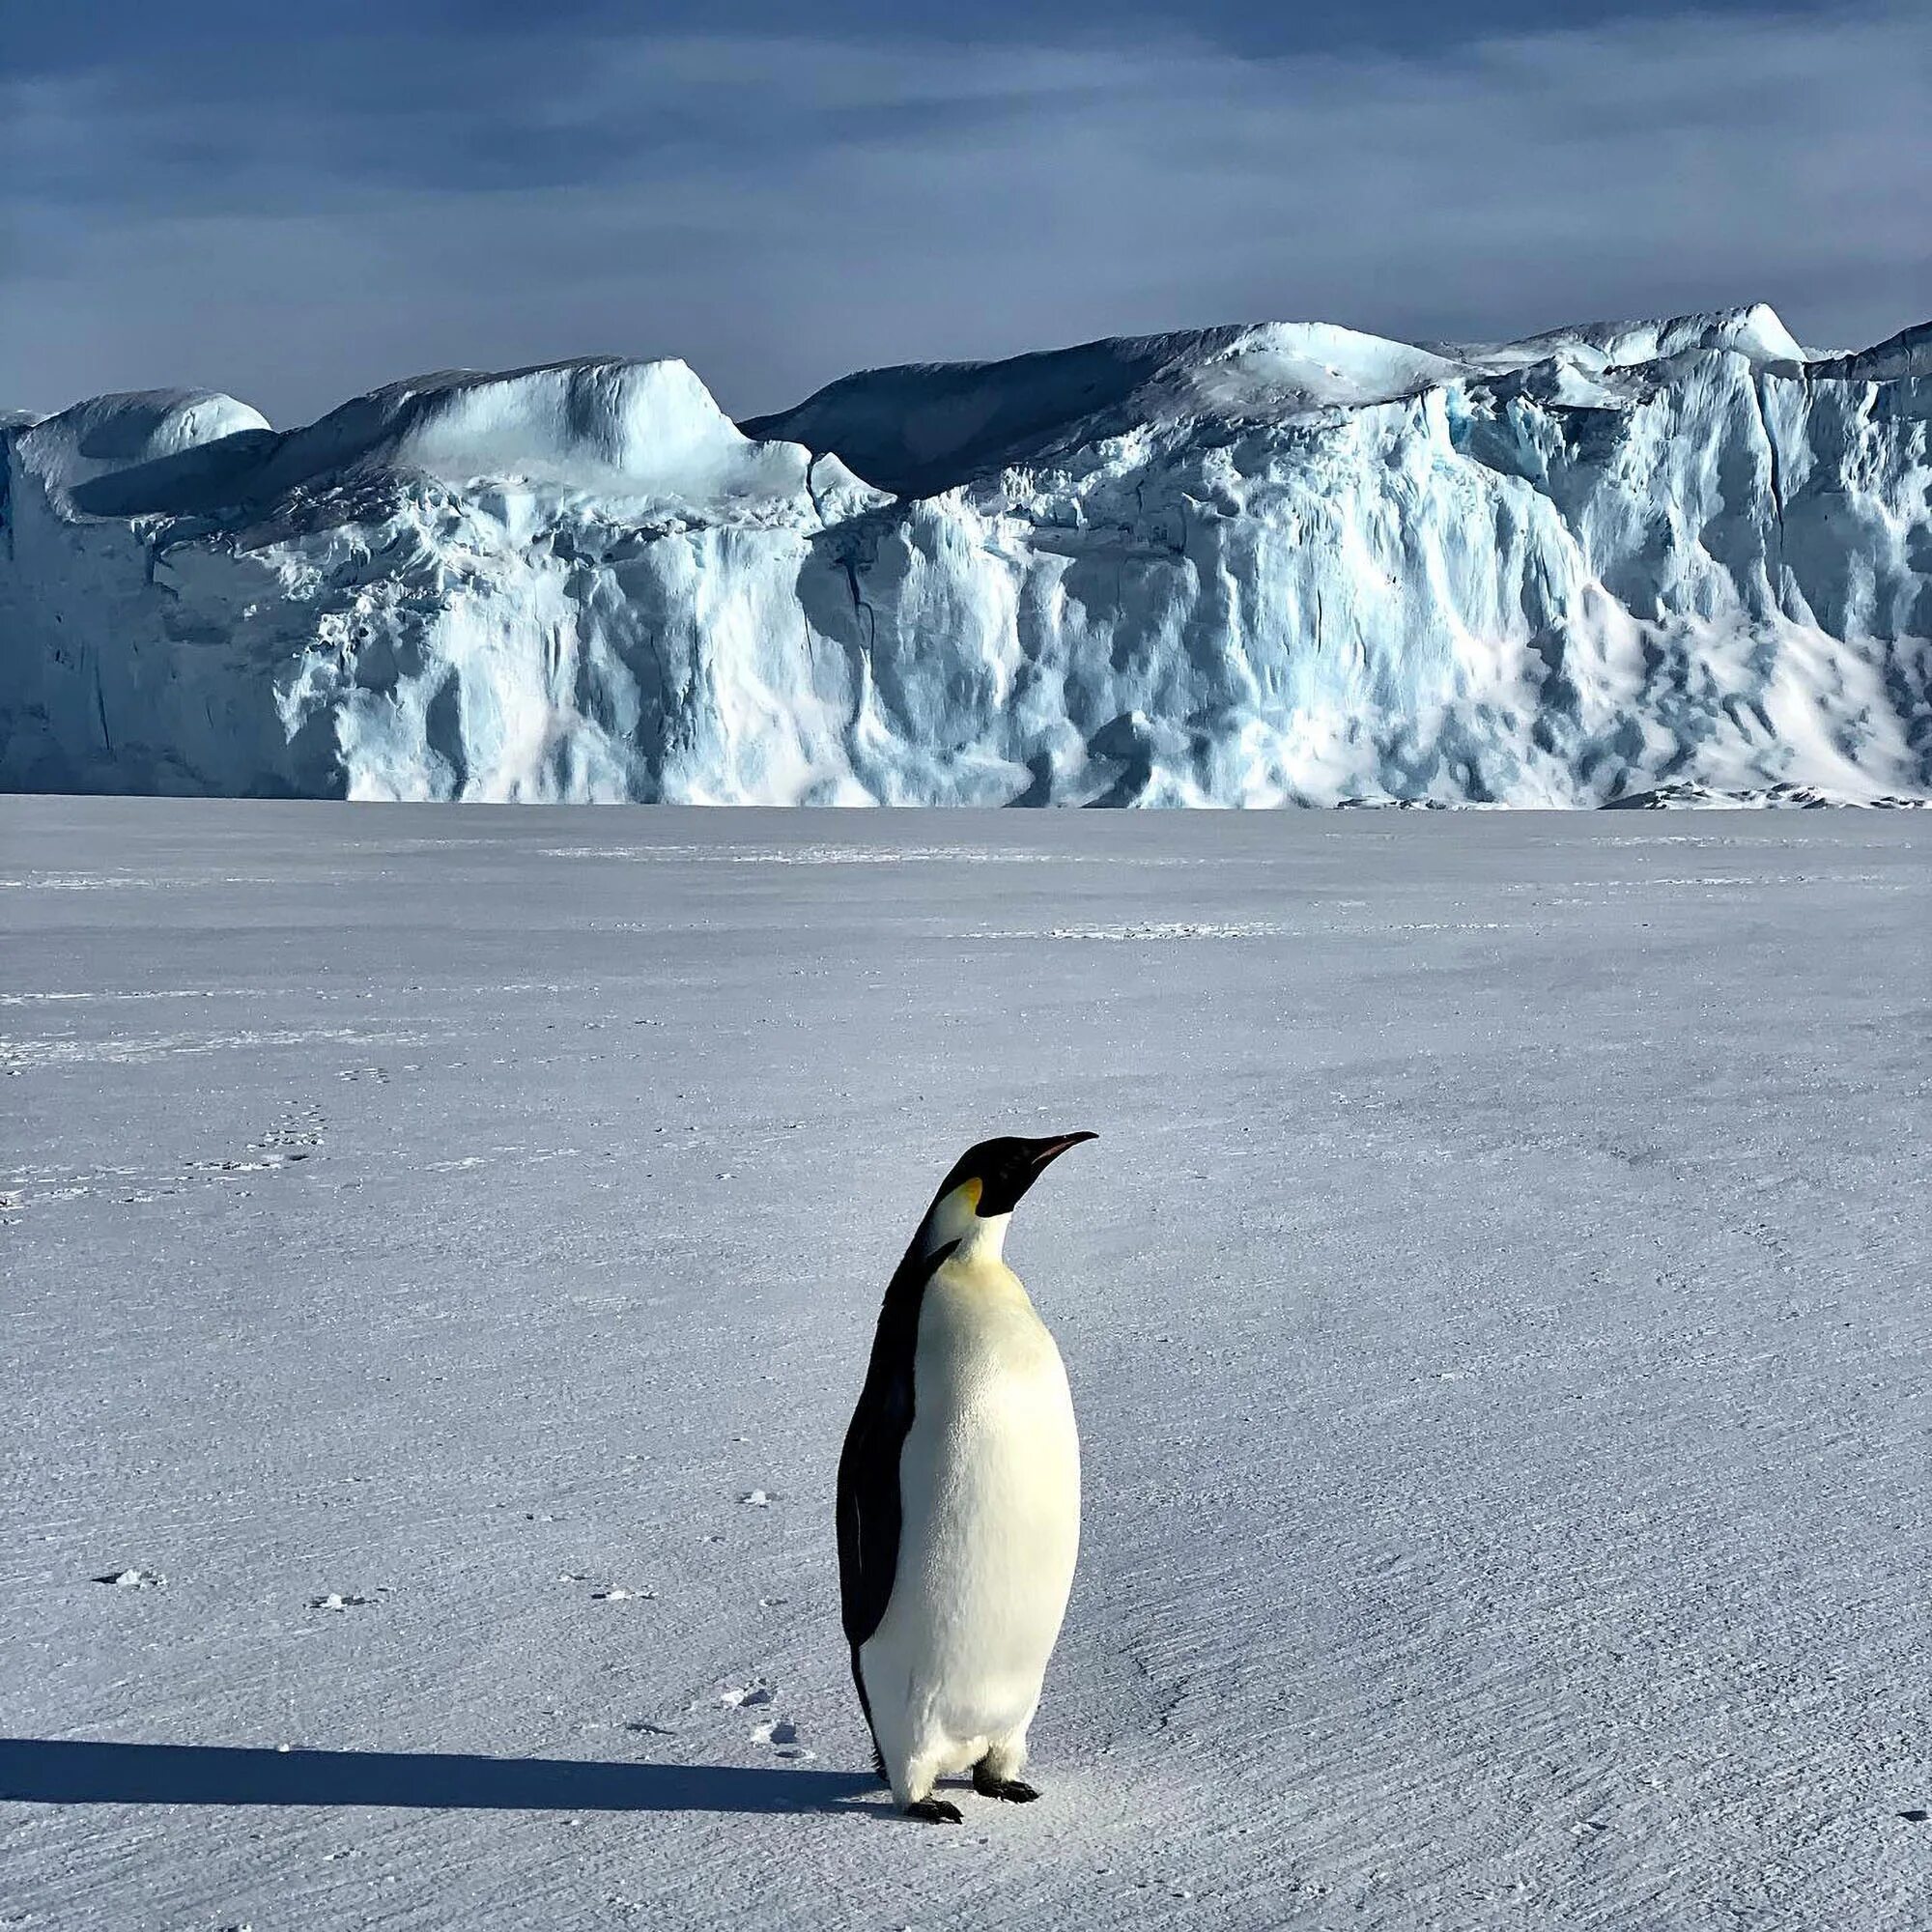 Где живут пингвины материк. Антарктида материк пингвины. Императорский Пингвин Антарктида Континент. Пингвины в Антарктиде. Императорский Пингвин в Антарктиде.